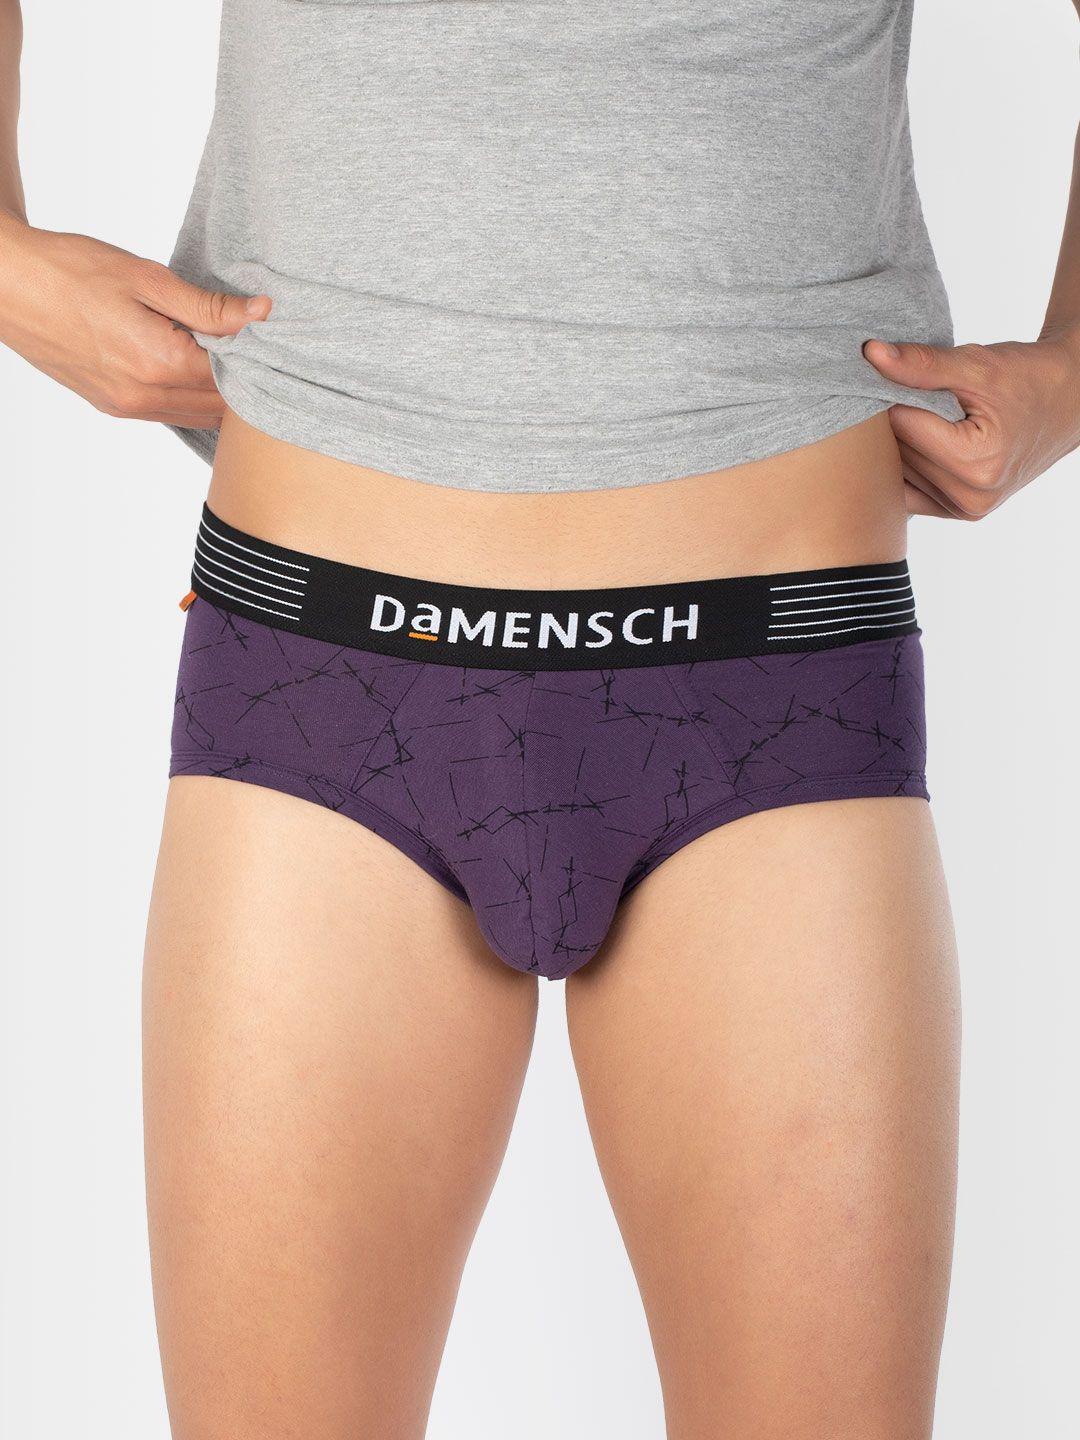 damensch-men-purple-&-black-printed-deo-cotton-deodorizing-basic-briefs-dam-ctp-b-pnp